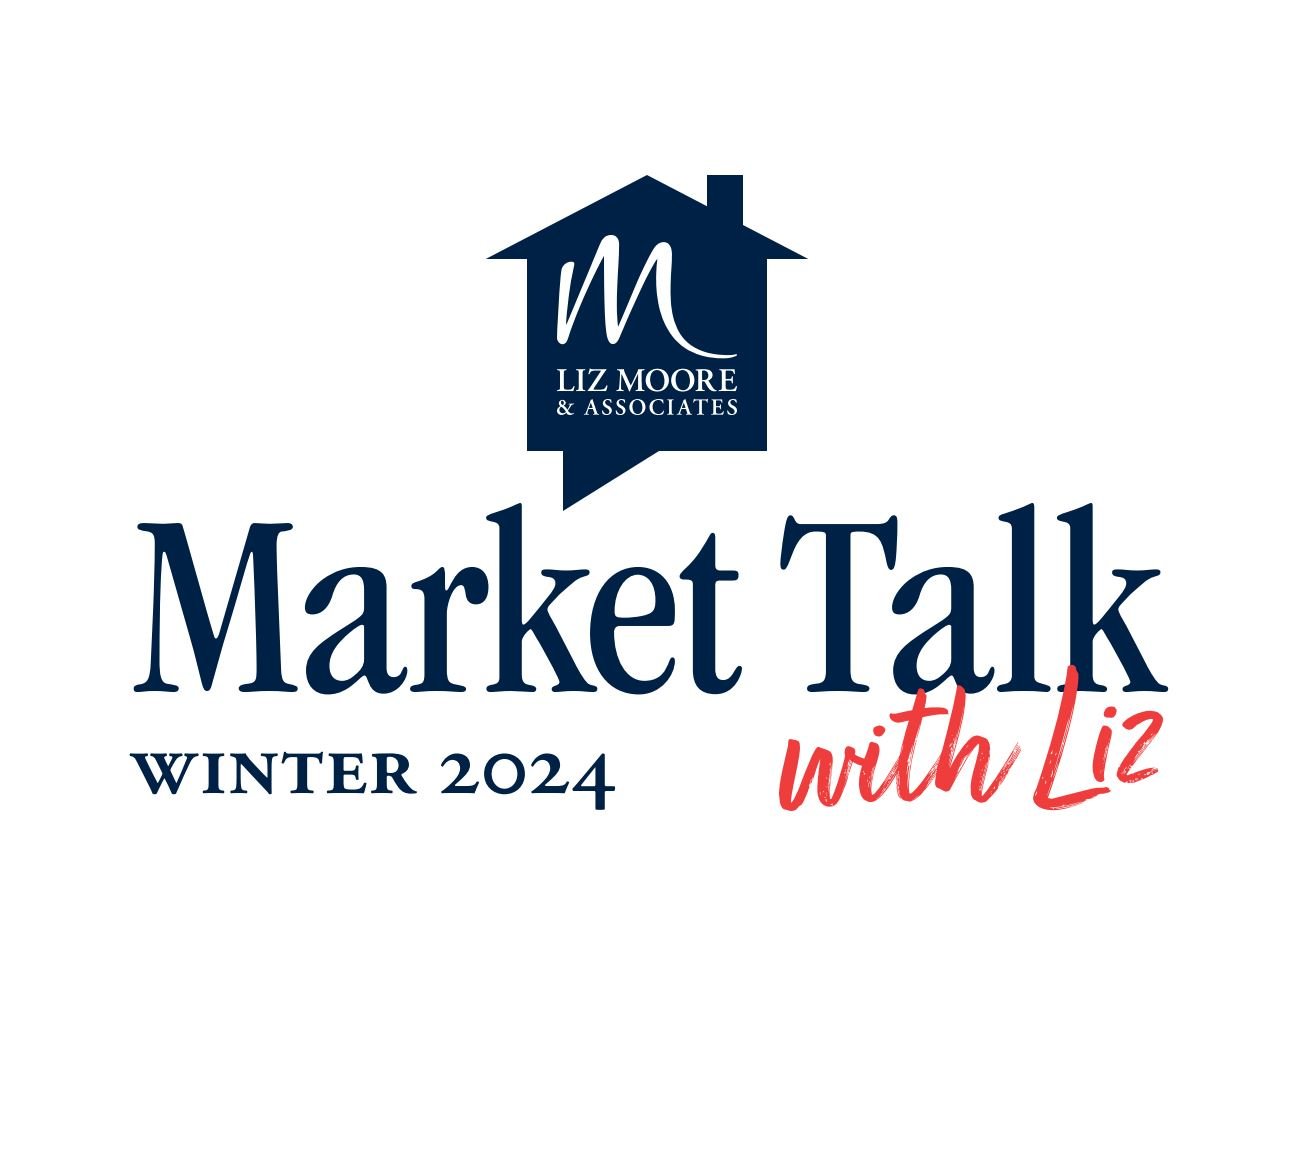 Winter 2024 Market Talk Report